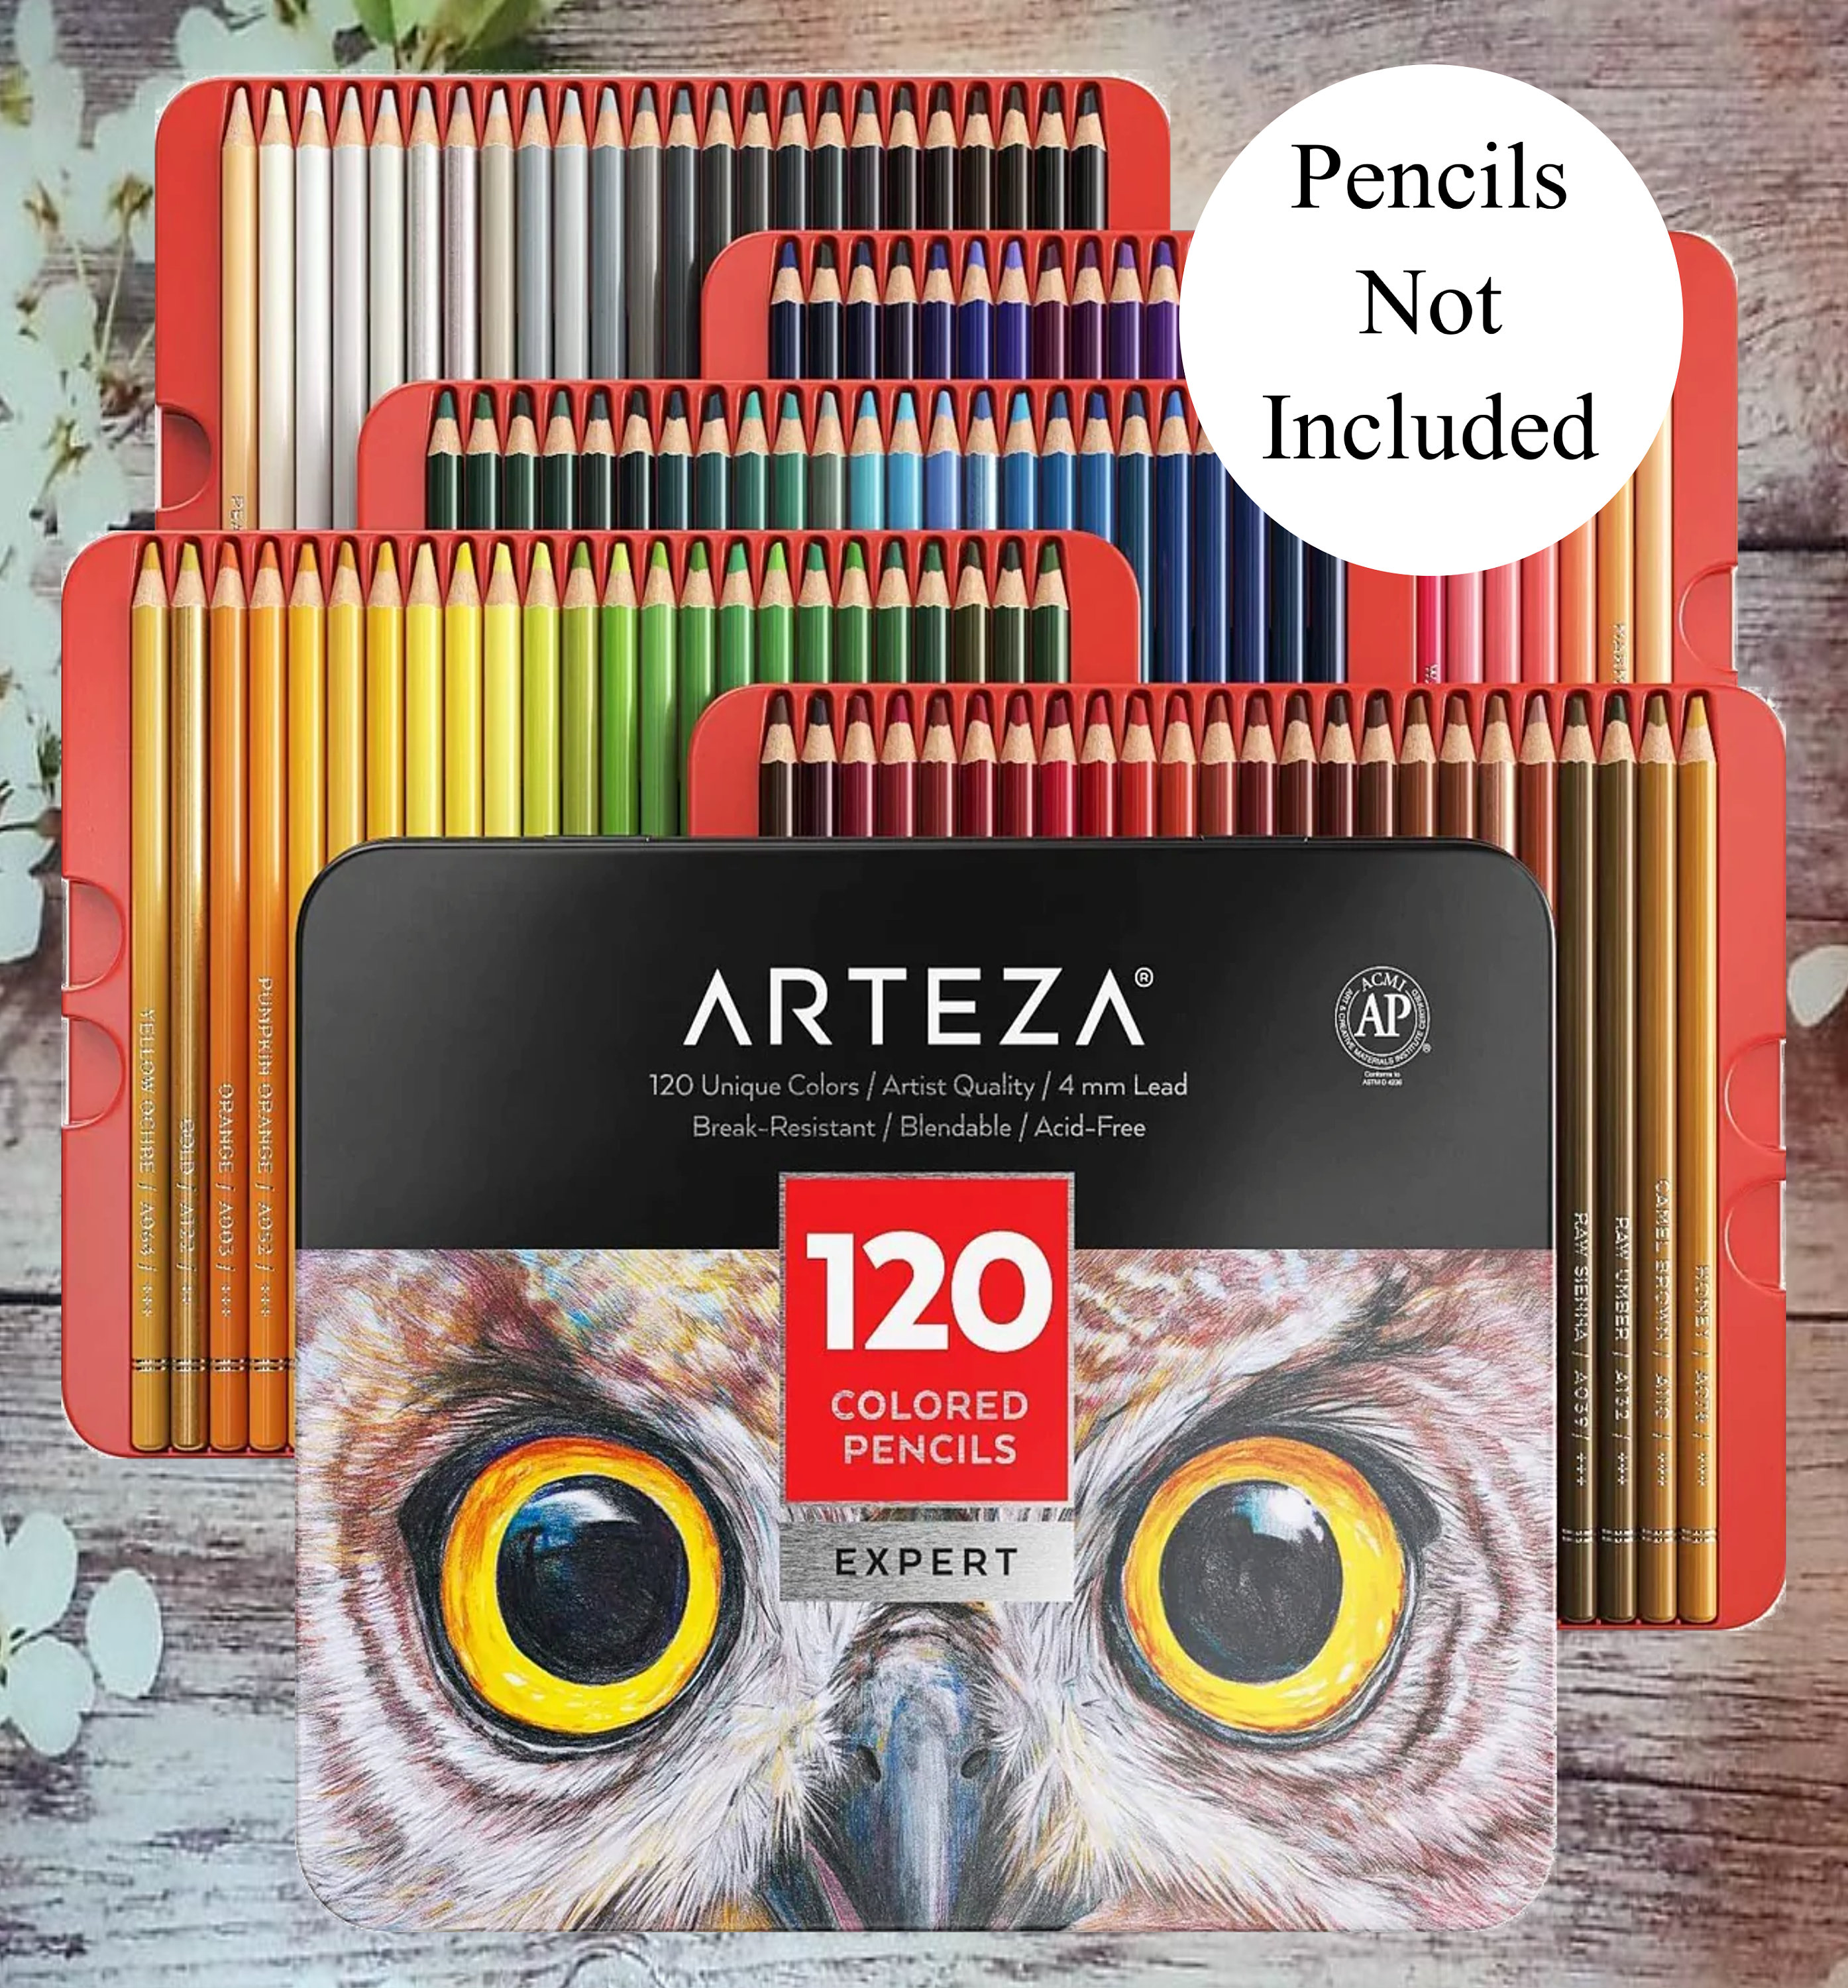 Arteza 120 Expert Colored Pencils Swatch Chart 